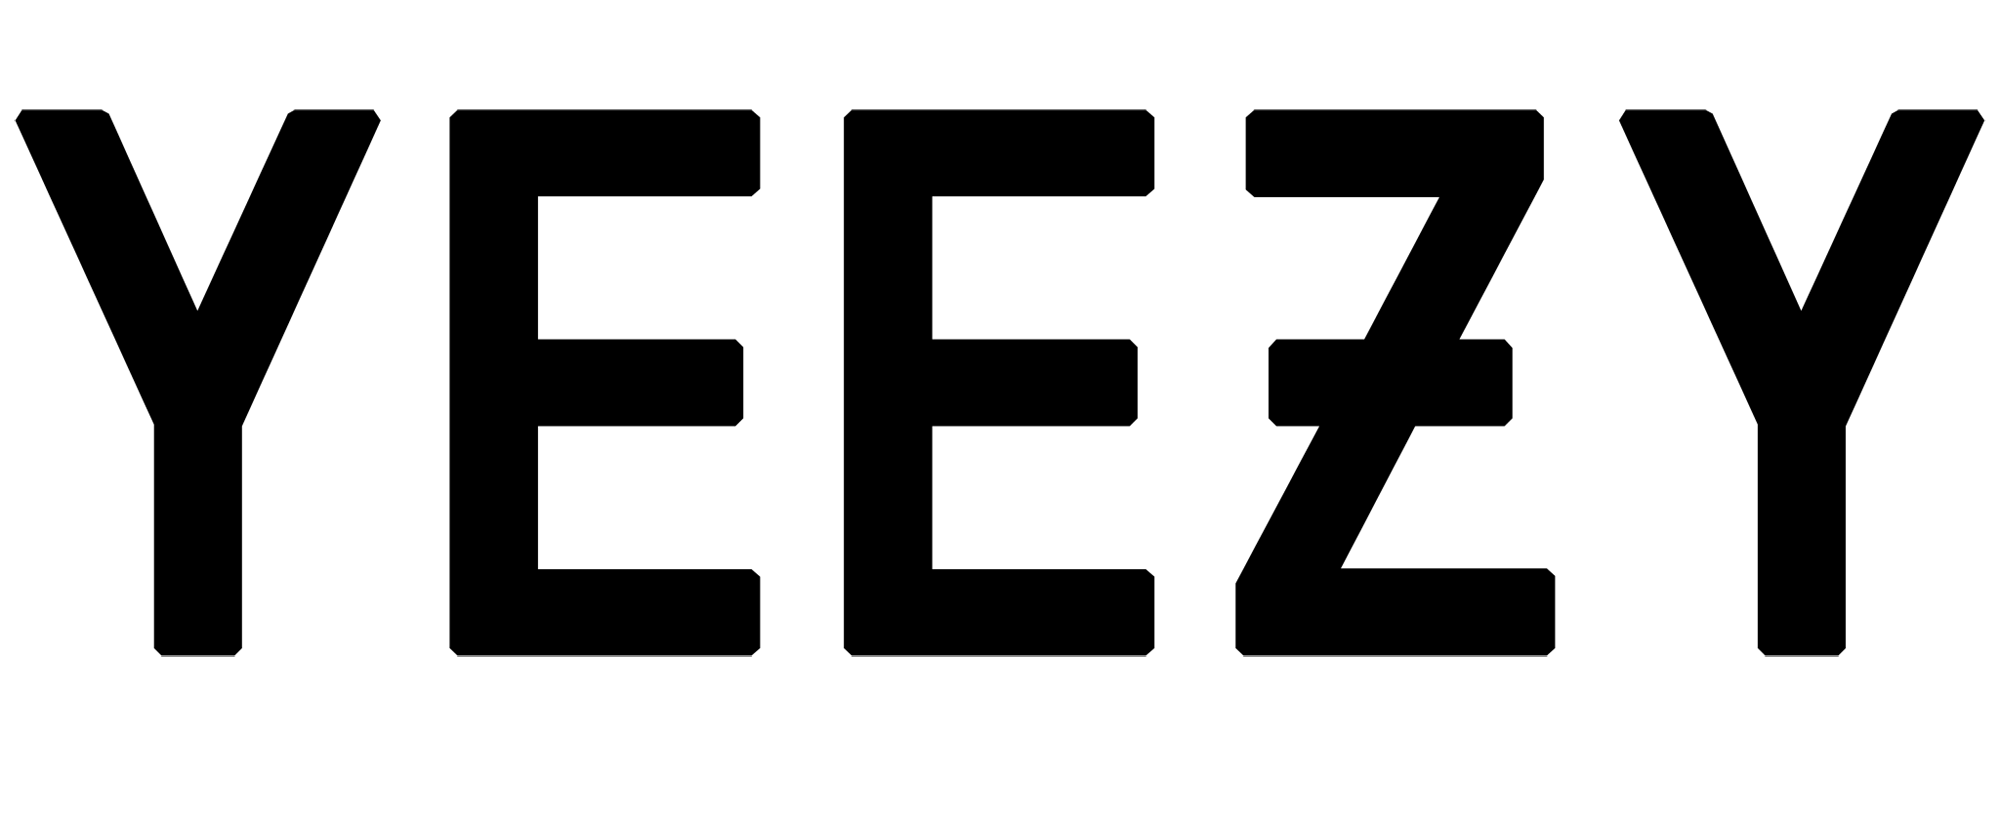 Yeezy Logo - Yeezy Logo, Yeezy Symbol, Meaning, History and Evolution